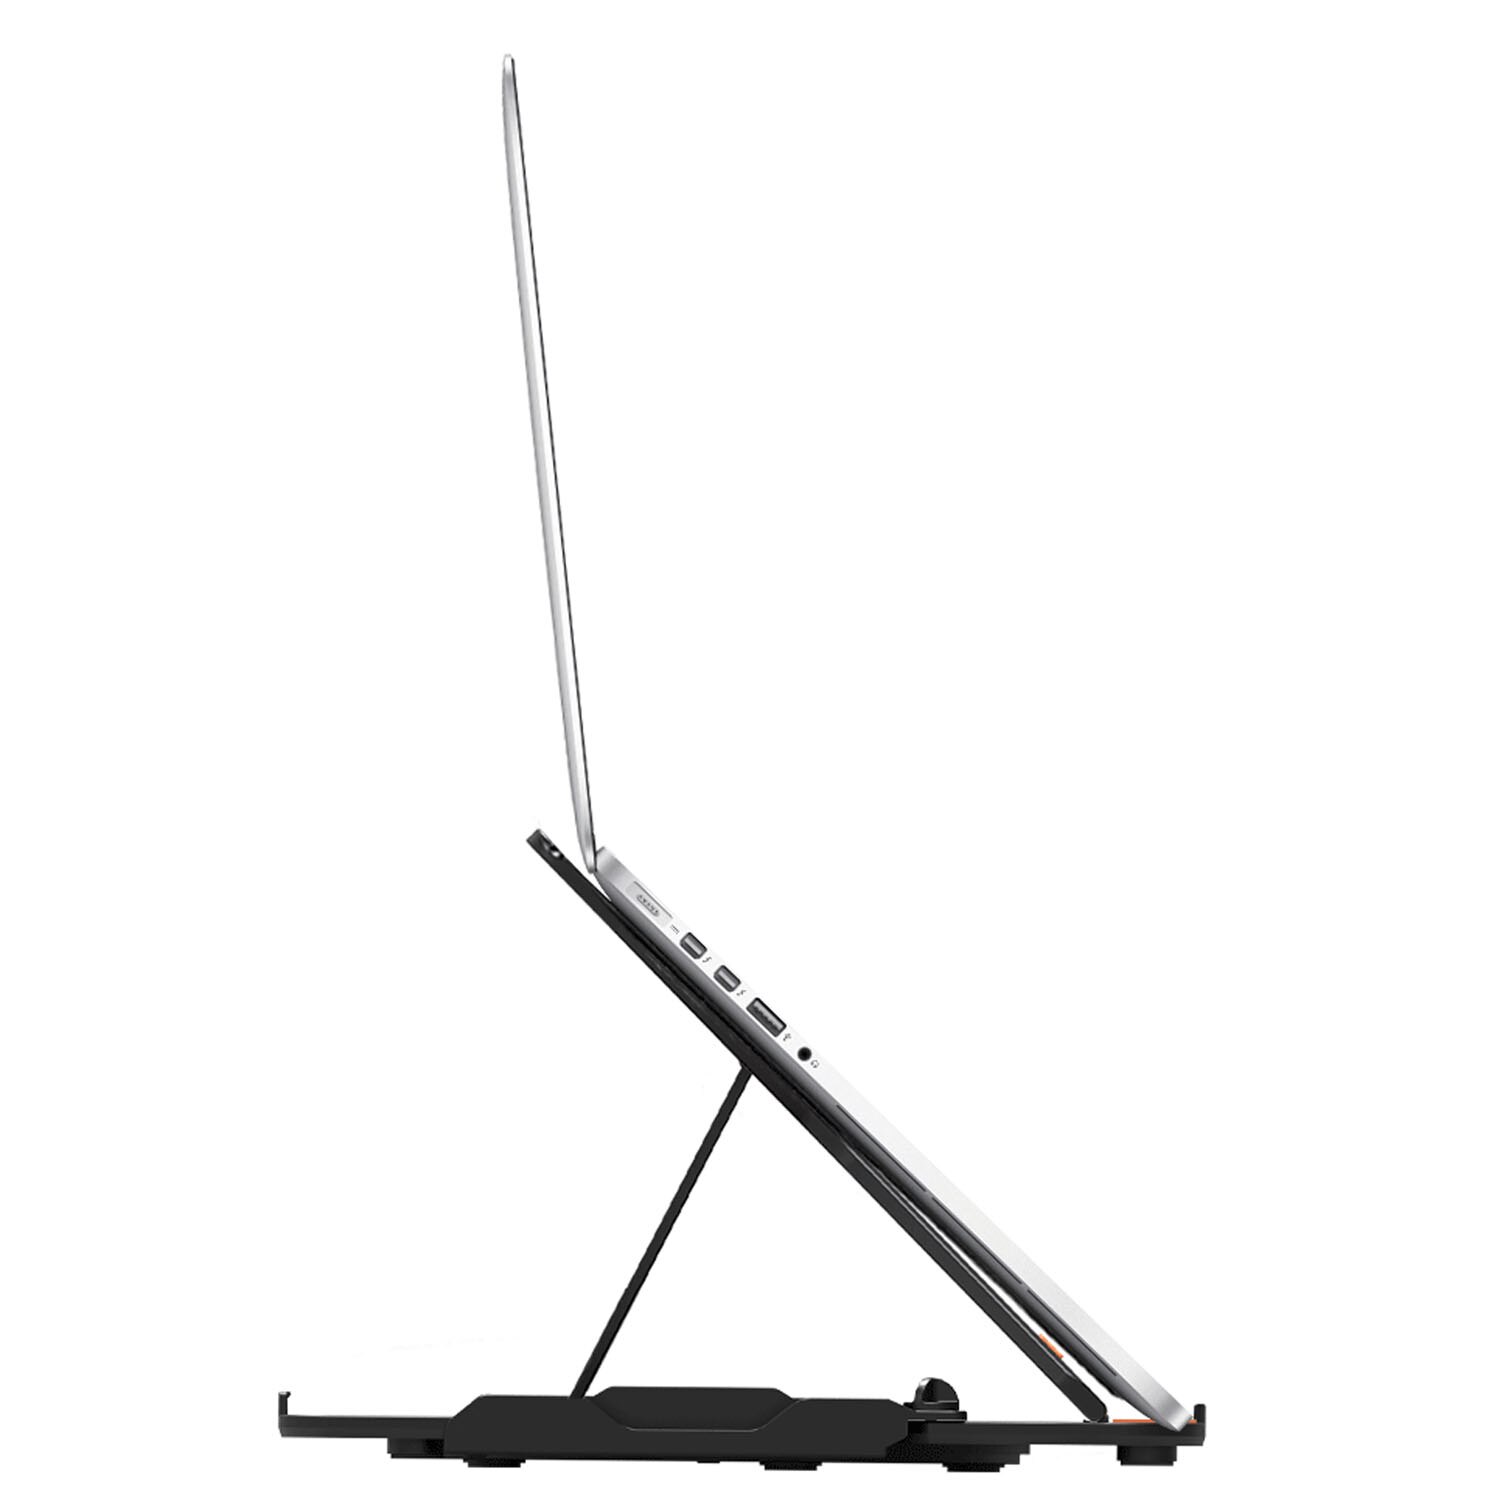 Besegad Folding Laptop Cooling Stand Adjustable Riser w/Phone Holder for Macbook Dell HP Lenovo ASUS 11-17 inch Notebook Tablet